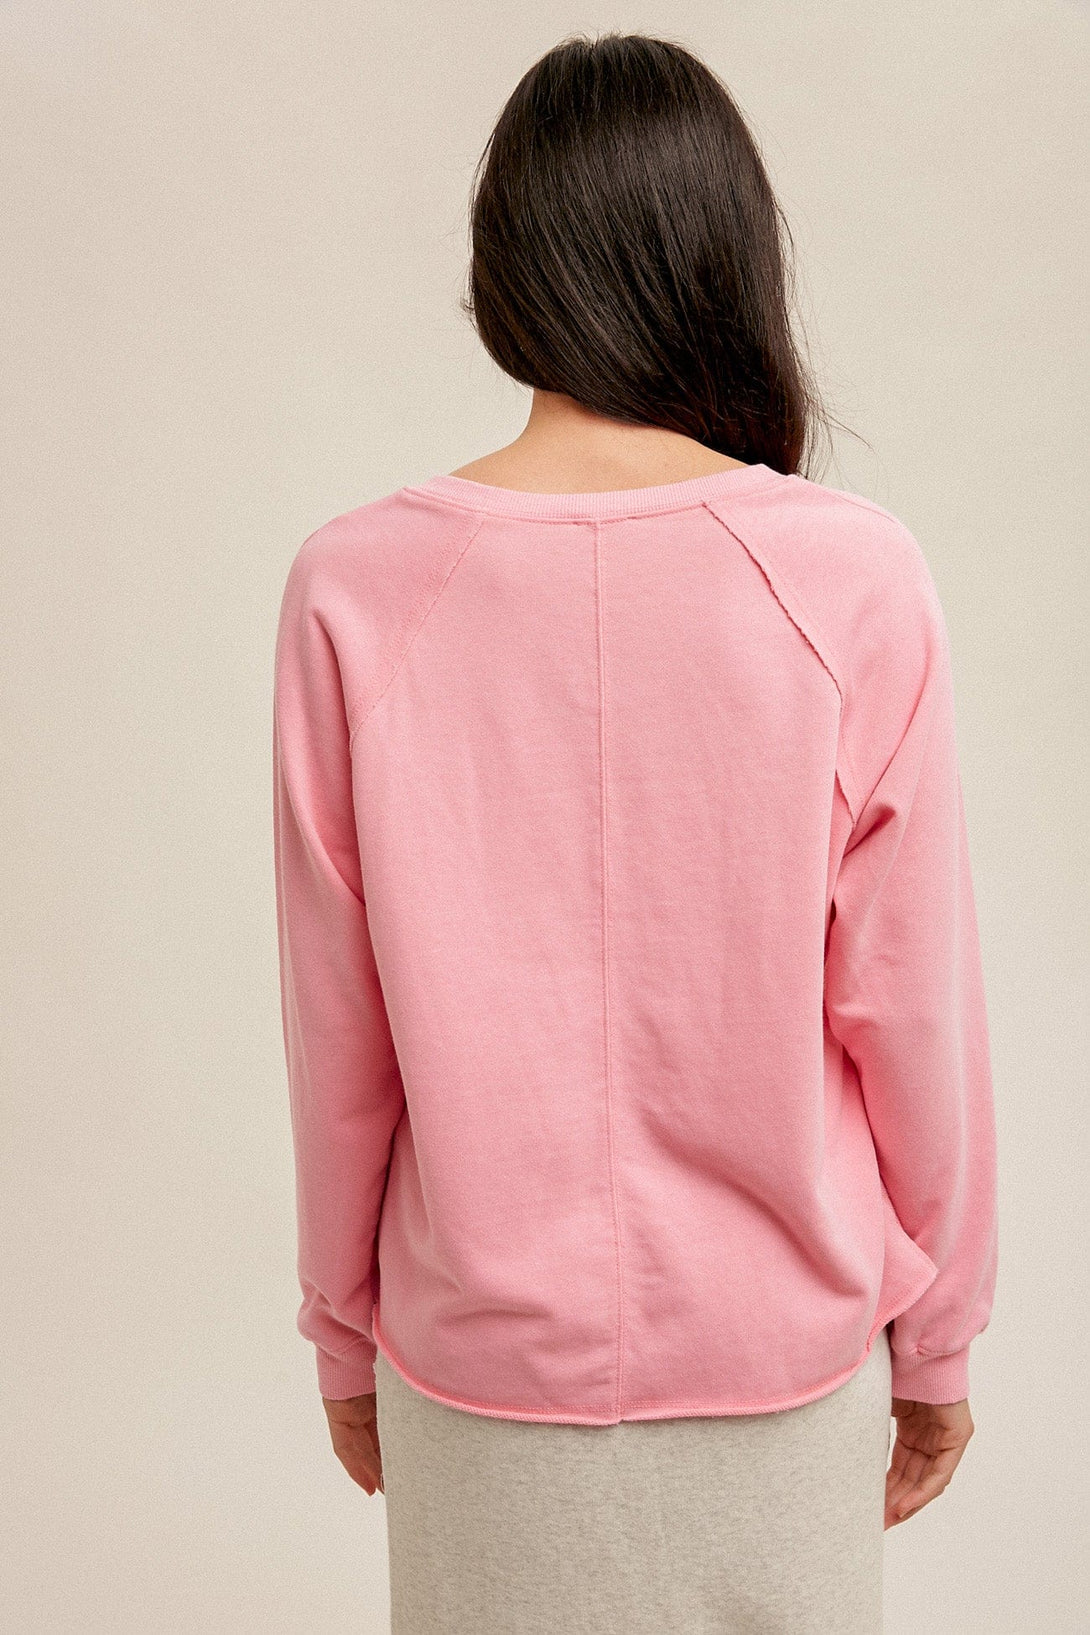 Hem & Thread Pullover Style Sweatshirt